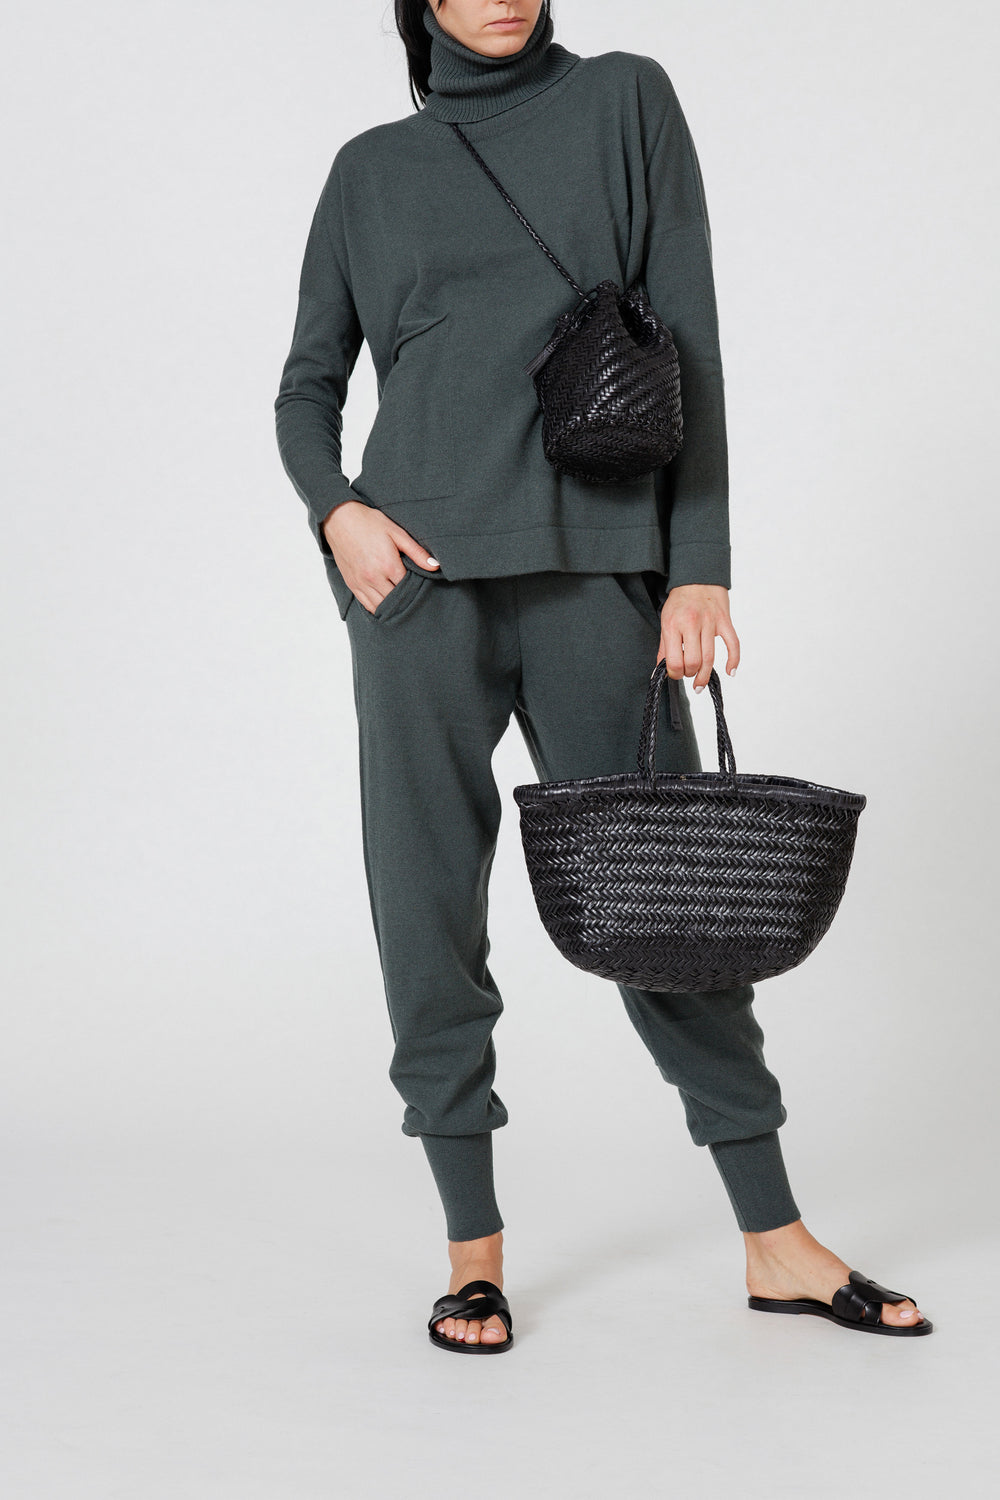 Dragon Diffusion woven leather bag handmade - Pompom Double Jump Black